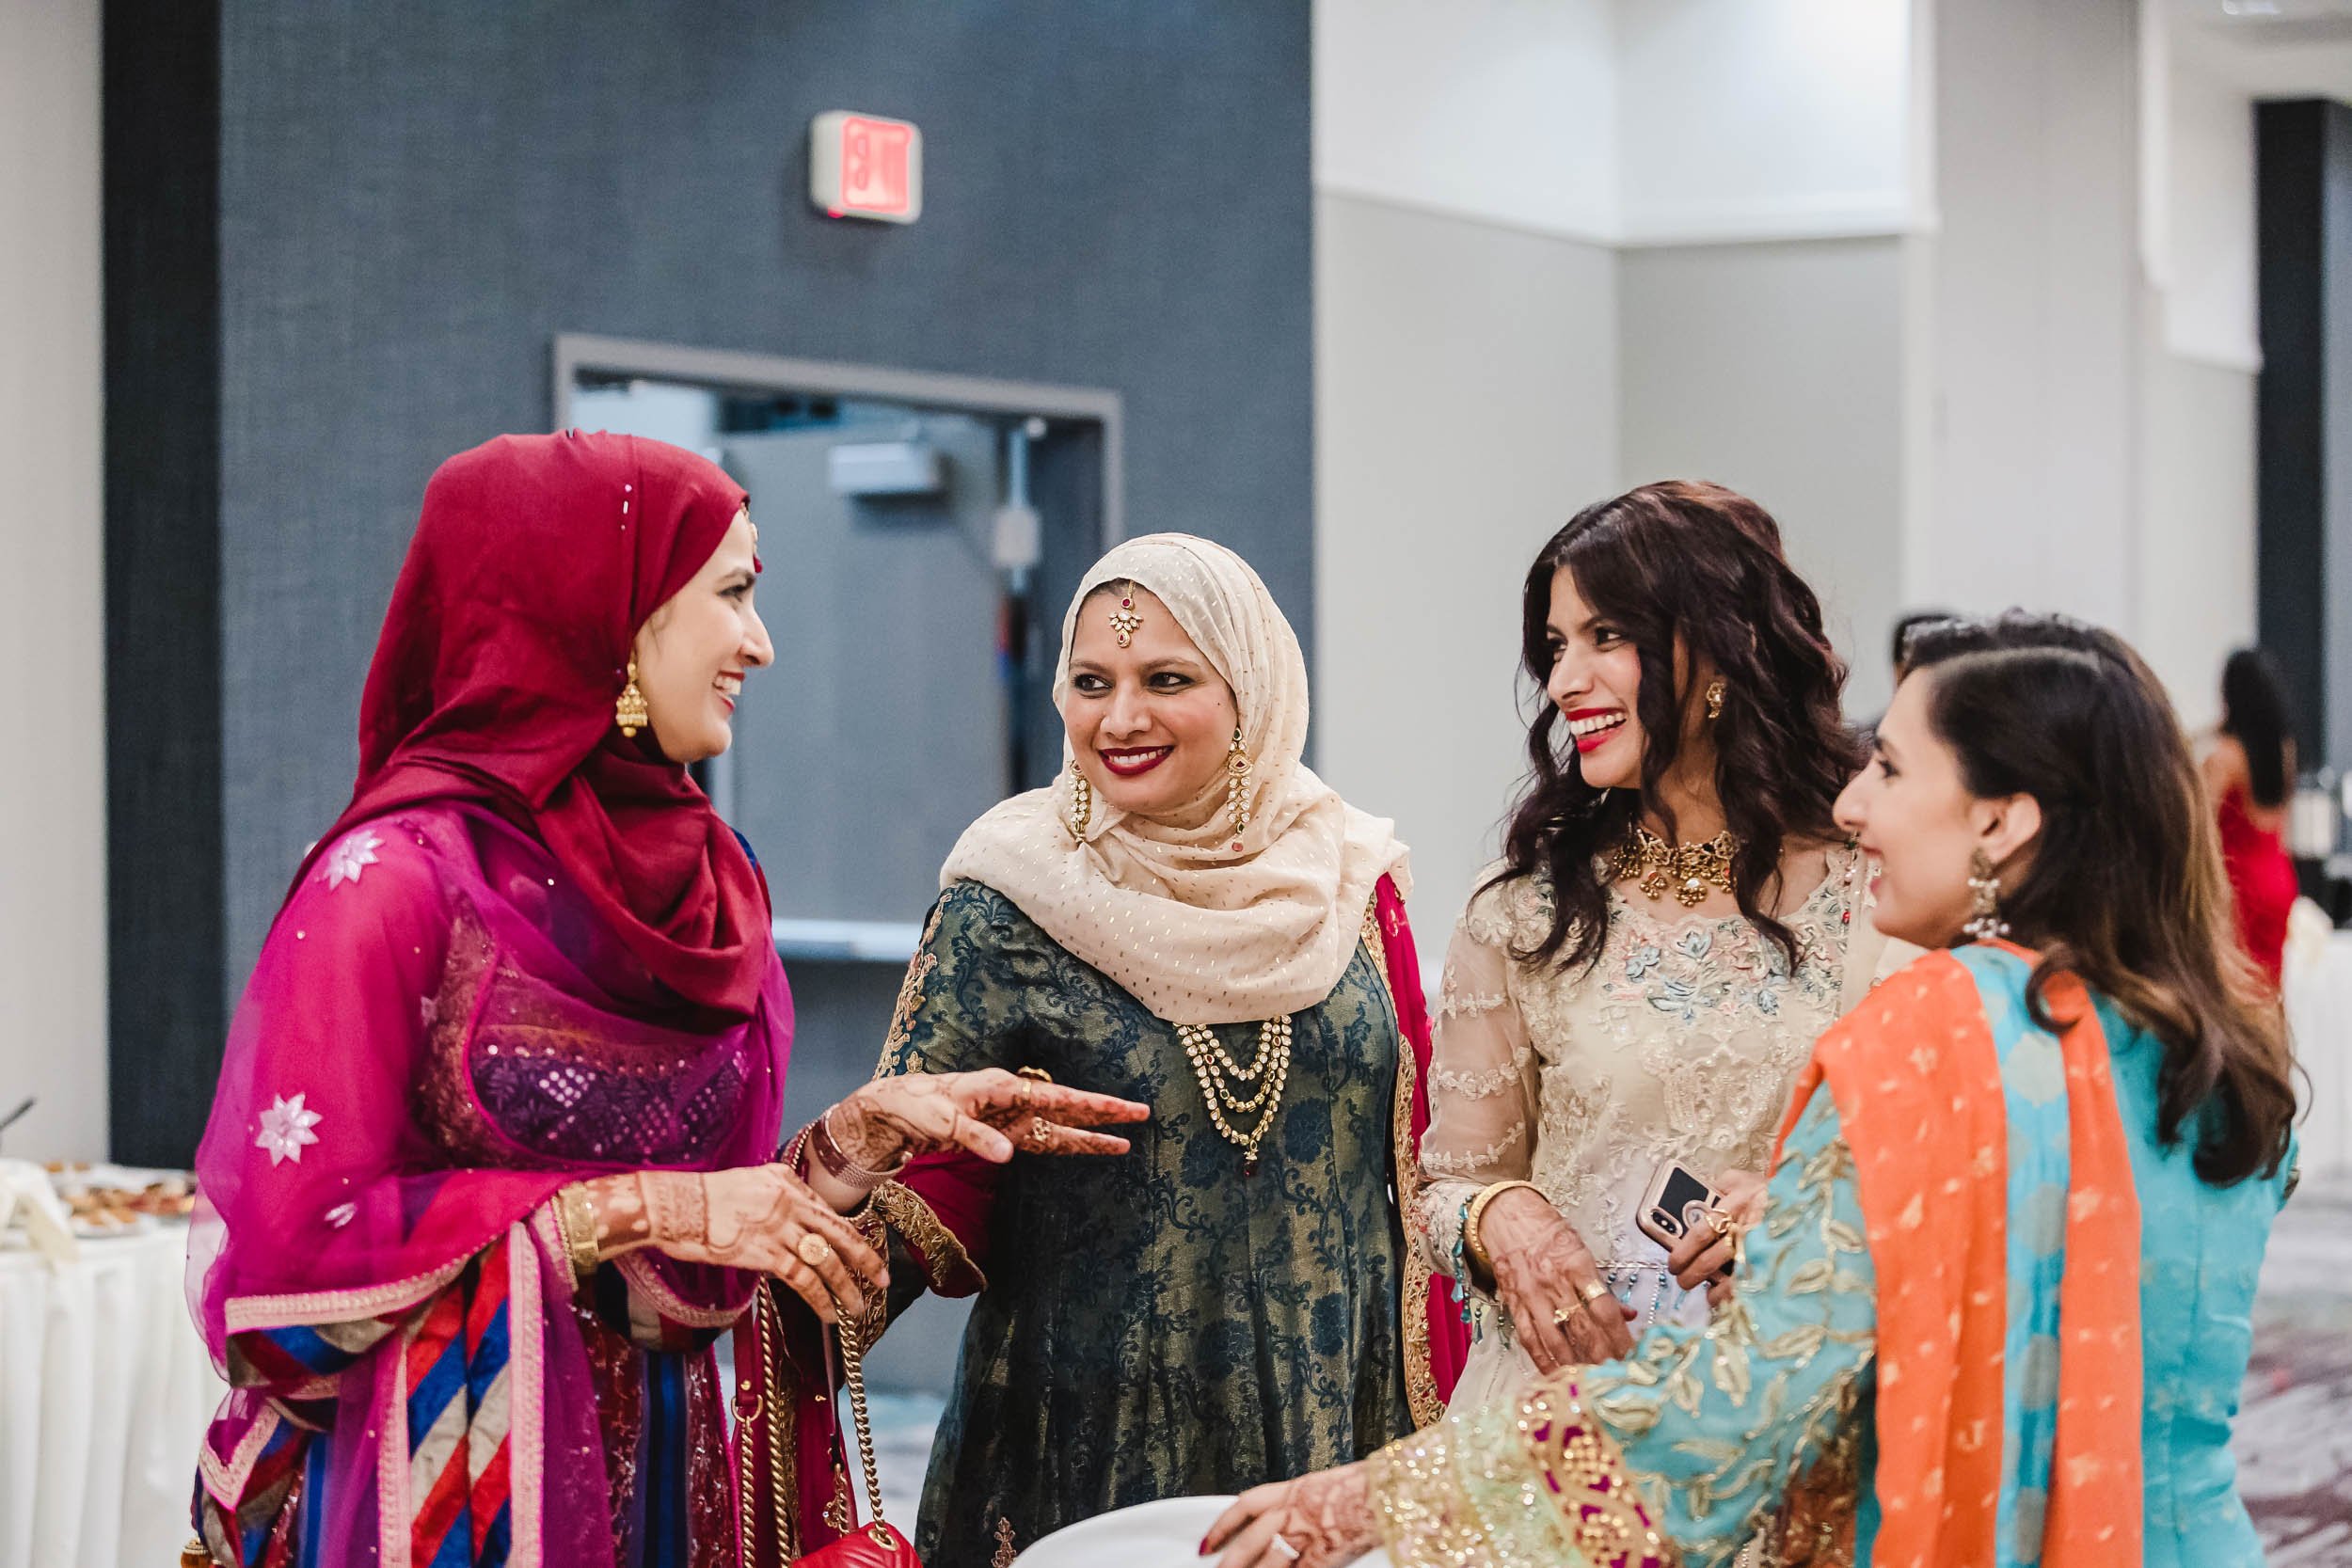 Women chat at wedding reception